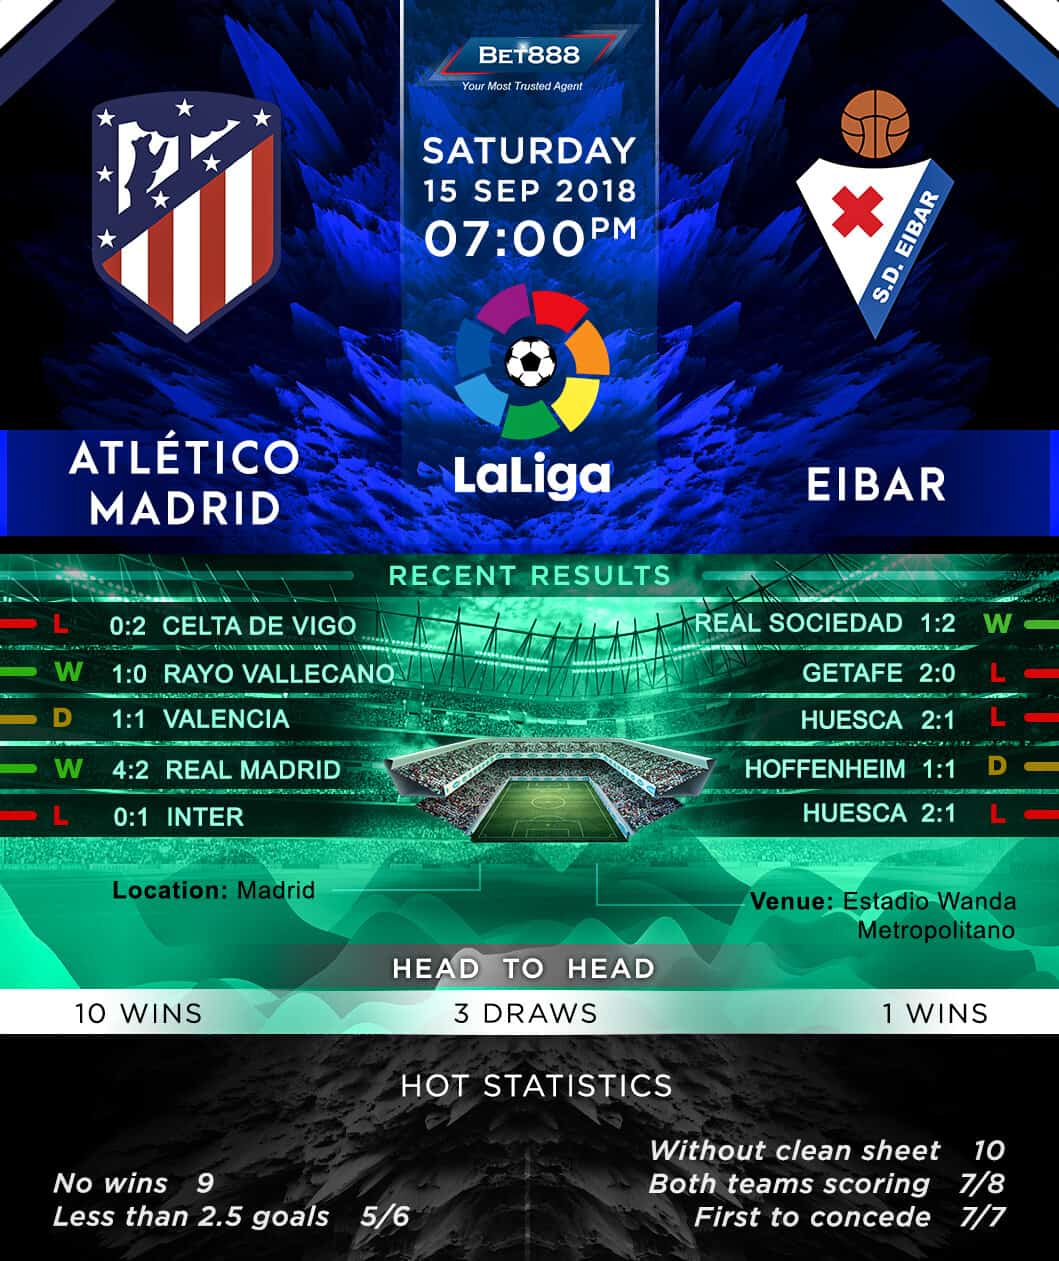 Atletico Madrid vs Eibar 15/09/18